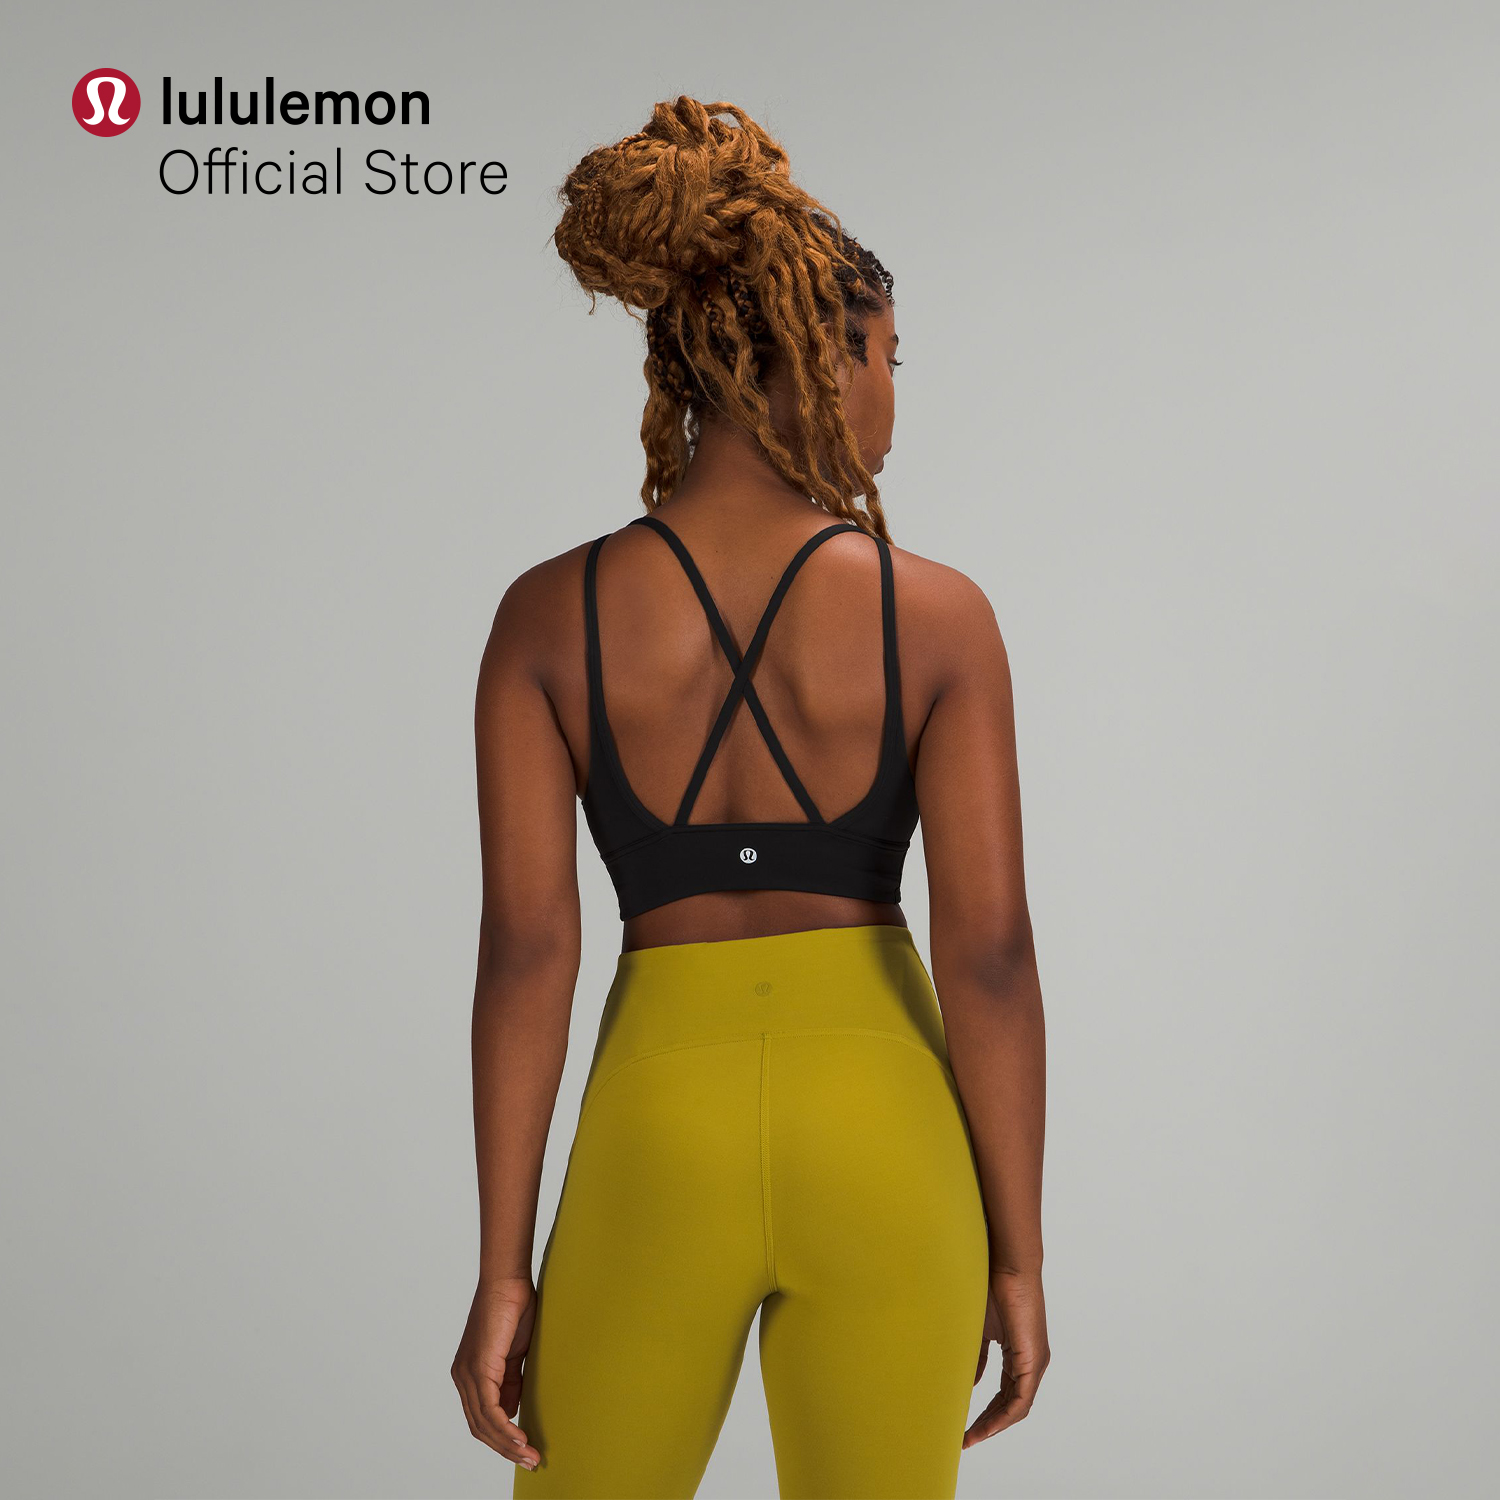 lululemon Women's In Alignment Longline Bra - Light Support, B-C Cups -  sports bra